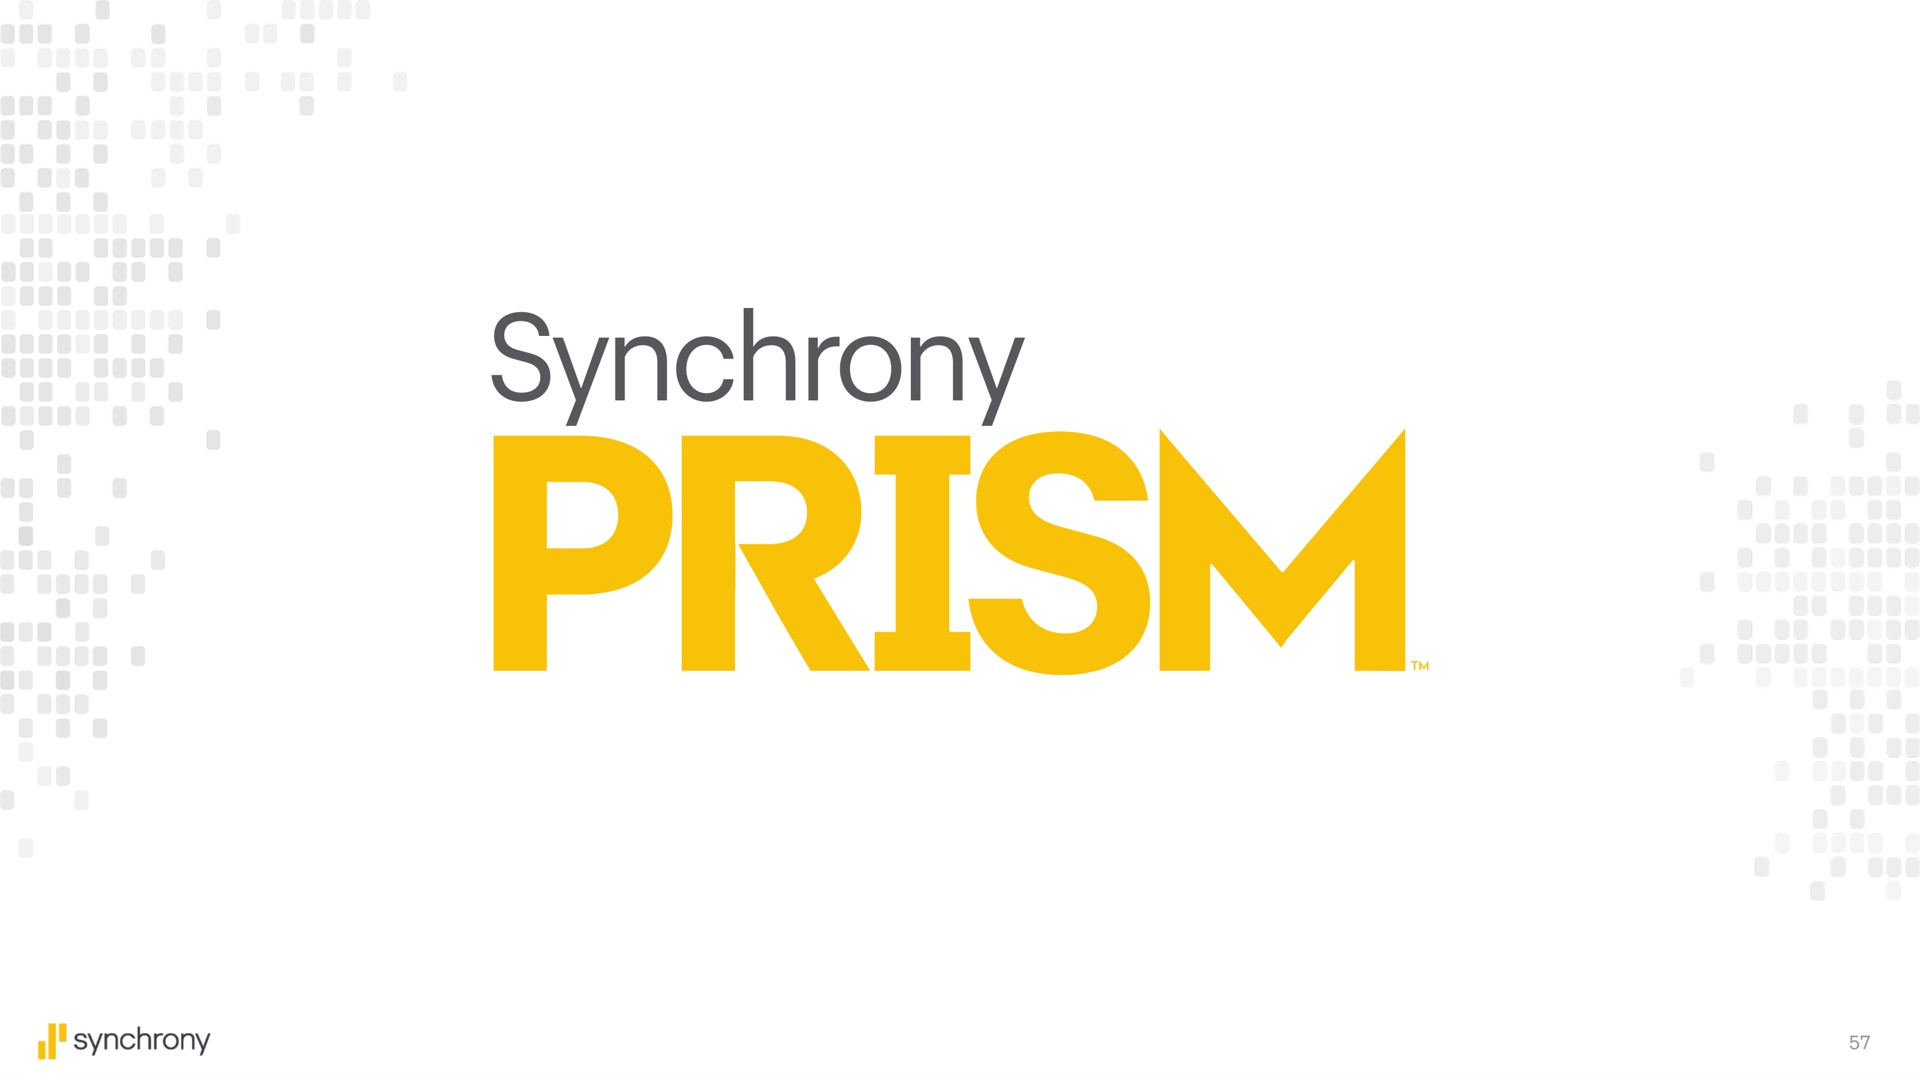 synchrony prism | Synchrony Financial